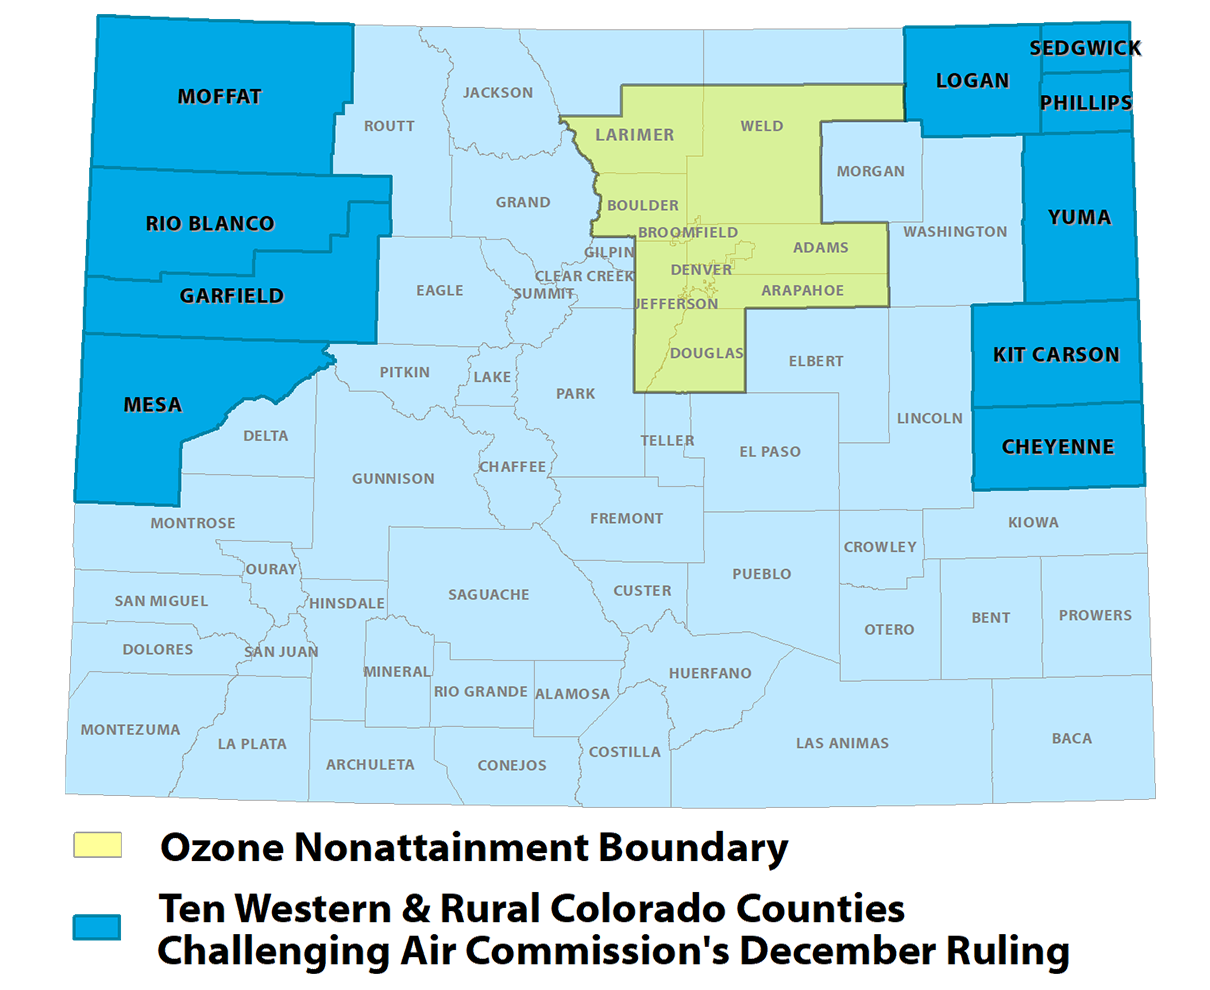 WRLG Coalition Counties and Municipalities